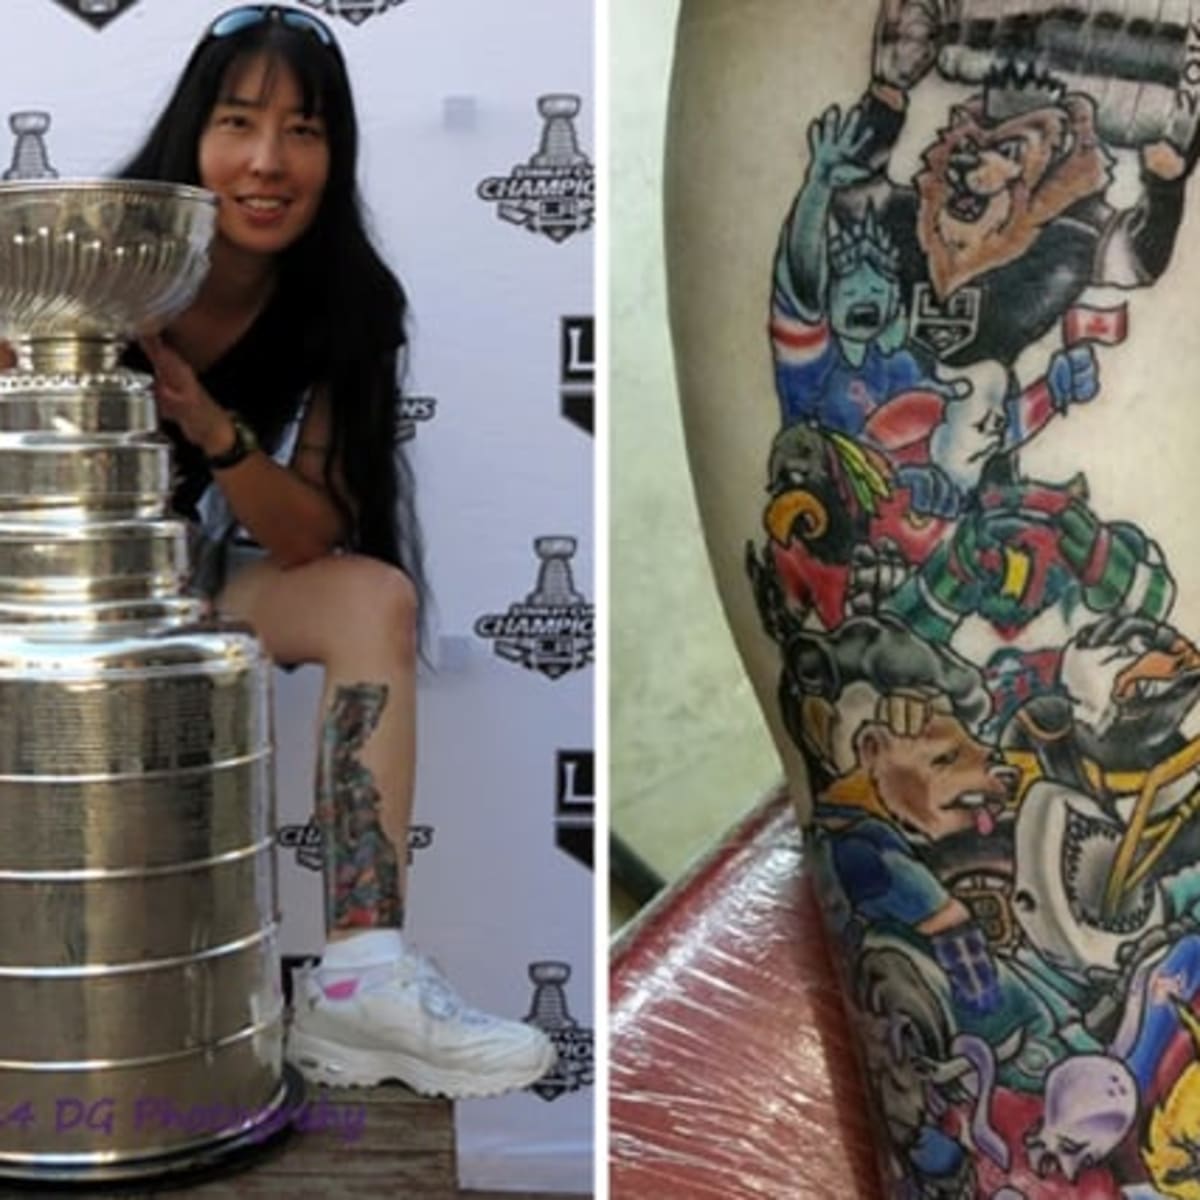 https://thehockeynews.com/.image/ar_1:1%2Cc_fill%2Ccs_srgb%2Cfl_progressive%2Cq_auto:good%2Cw_1200/MTg1MDUwODY3NjU3MDI0ODU3/epic-stanley-cup-tattoo-is-real-and-its-spectacular.jpg